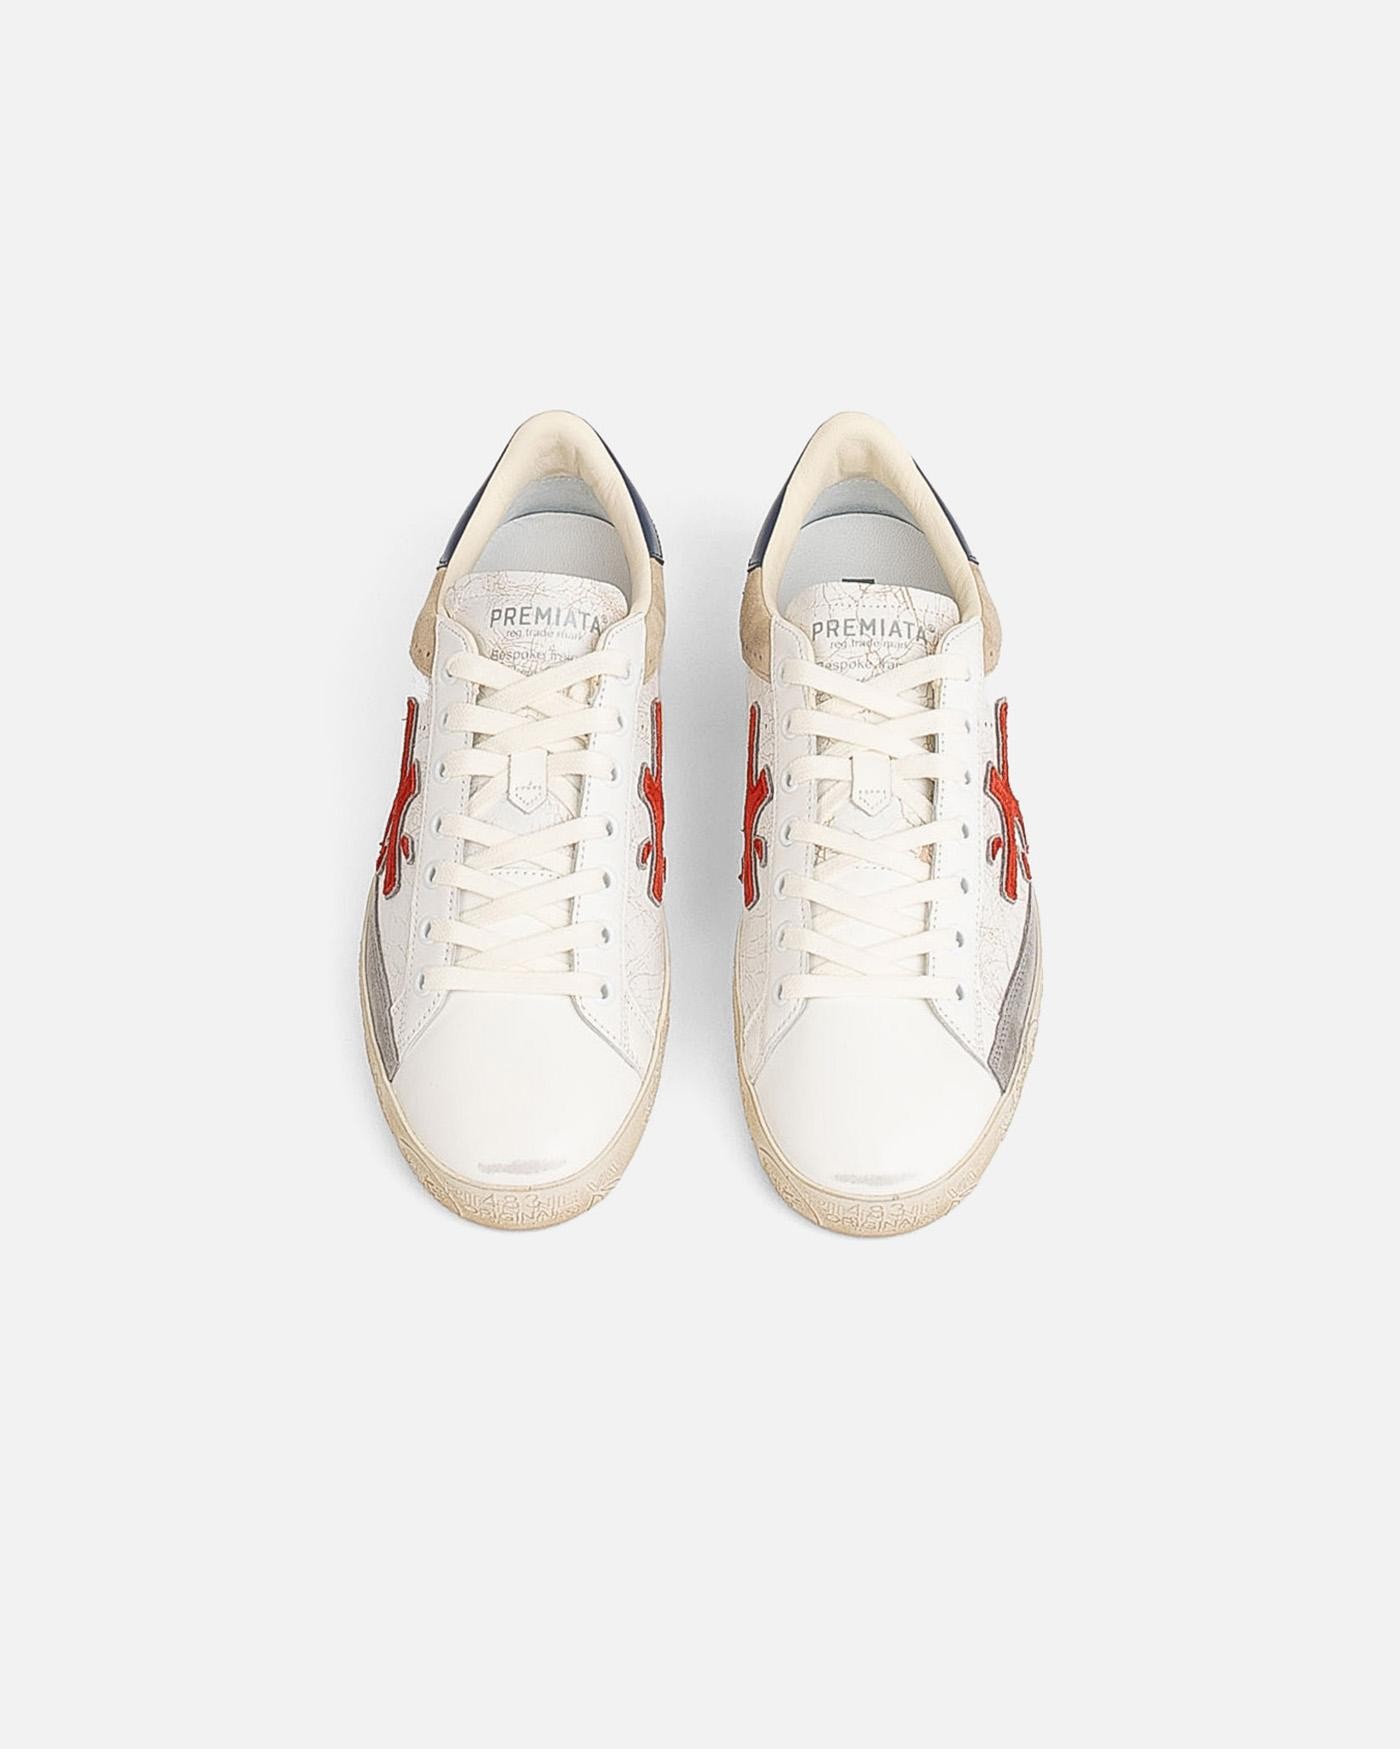 premiata-zapatillas-steven-6650-sneakers-white-blancas-6